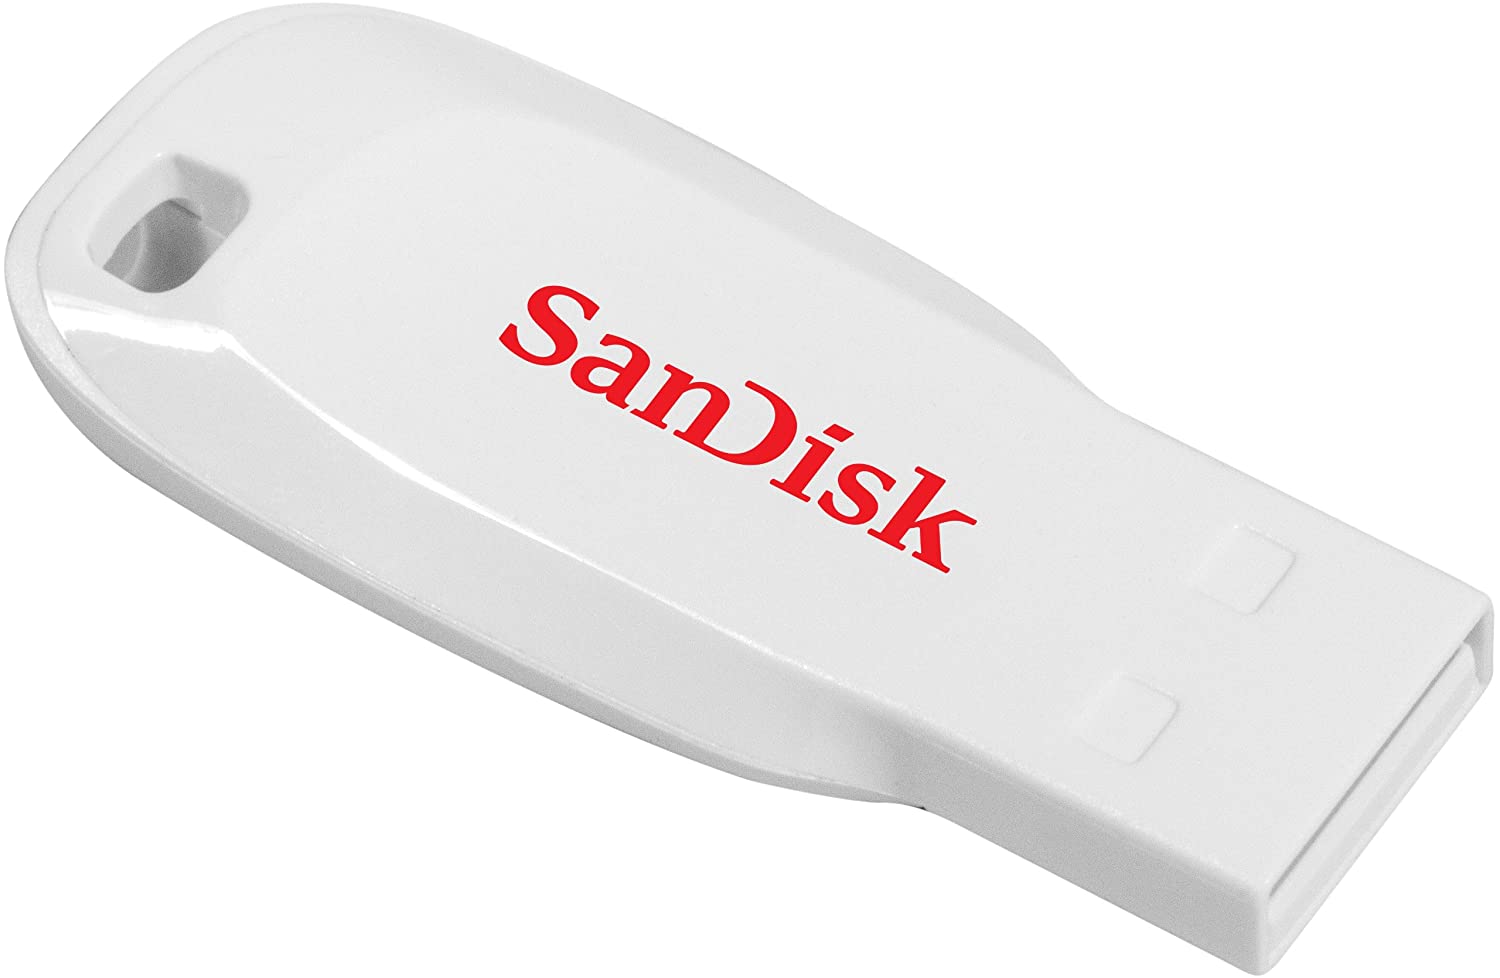 SanDisk Flash Drive Cruzer Blade